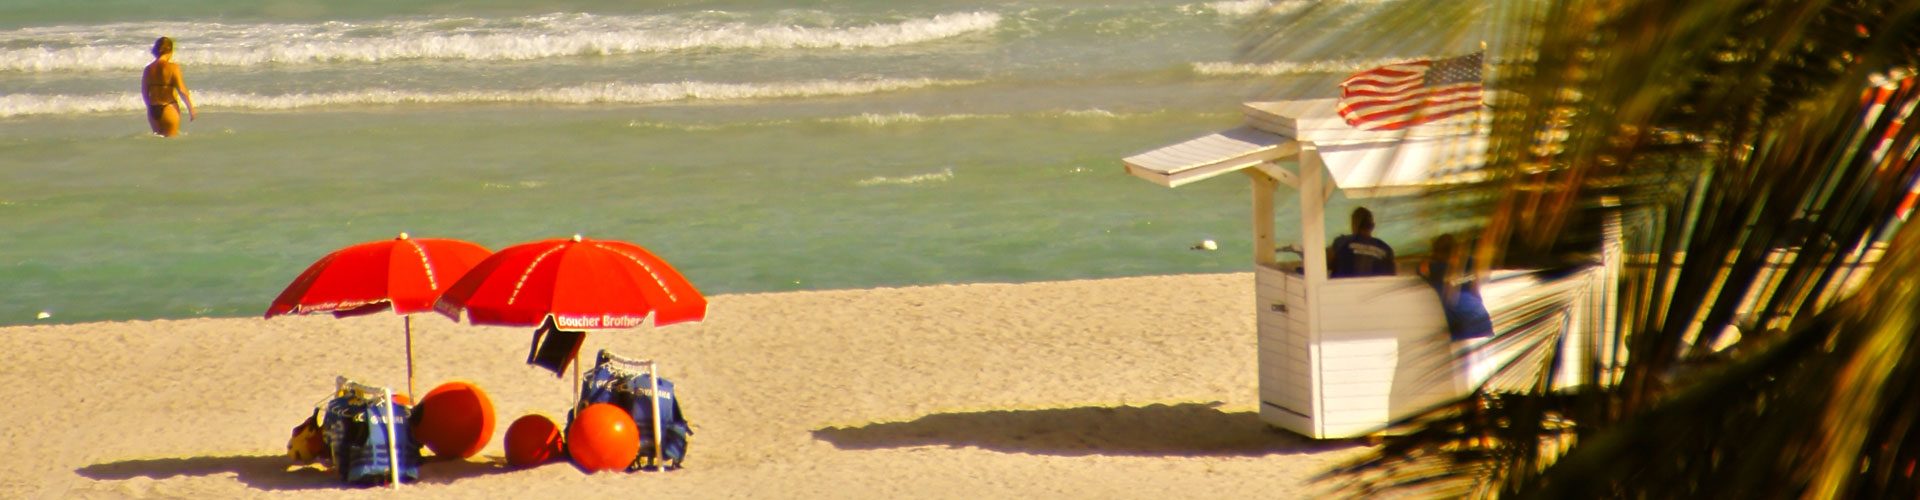 Karibikfeeling am Strand von Miami Beach, Florida